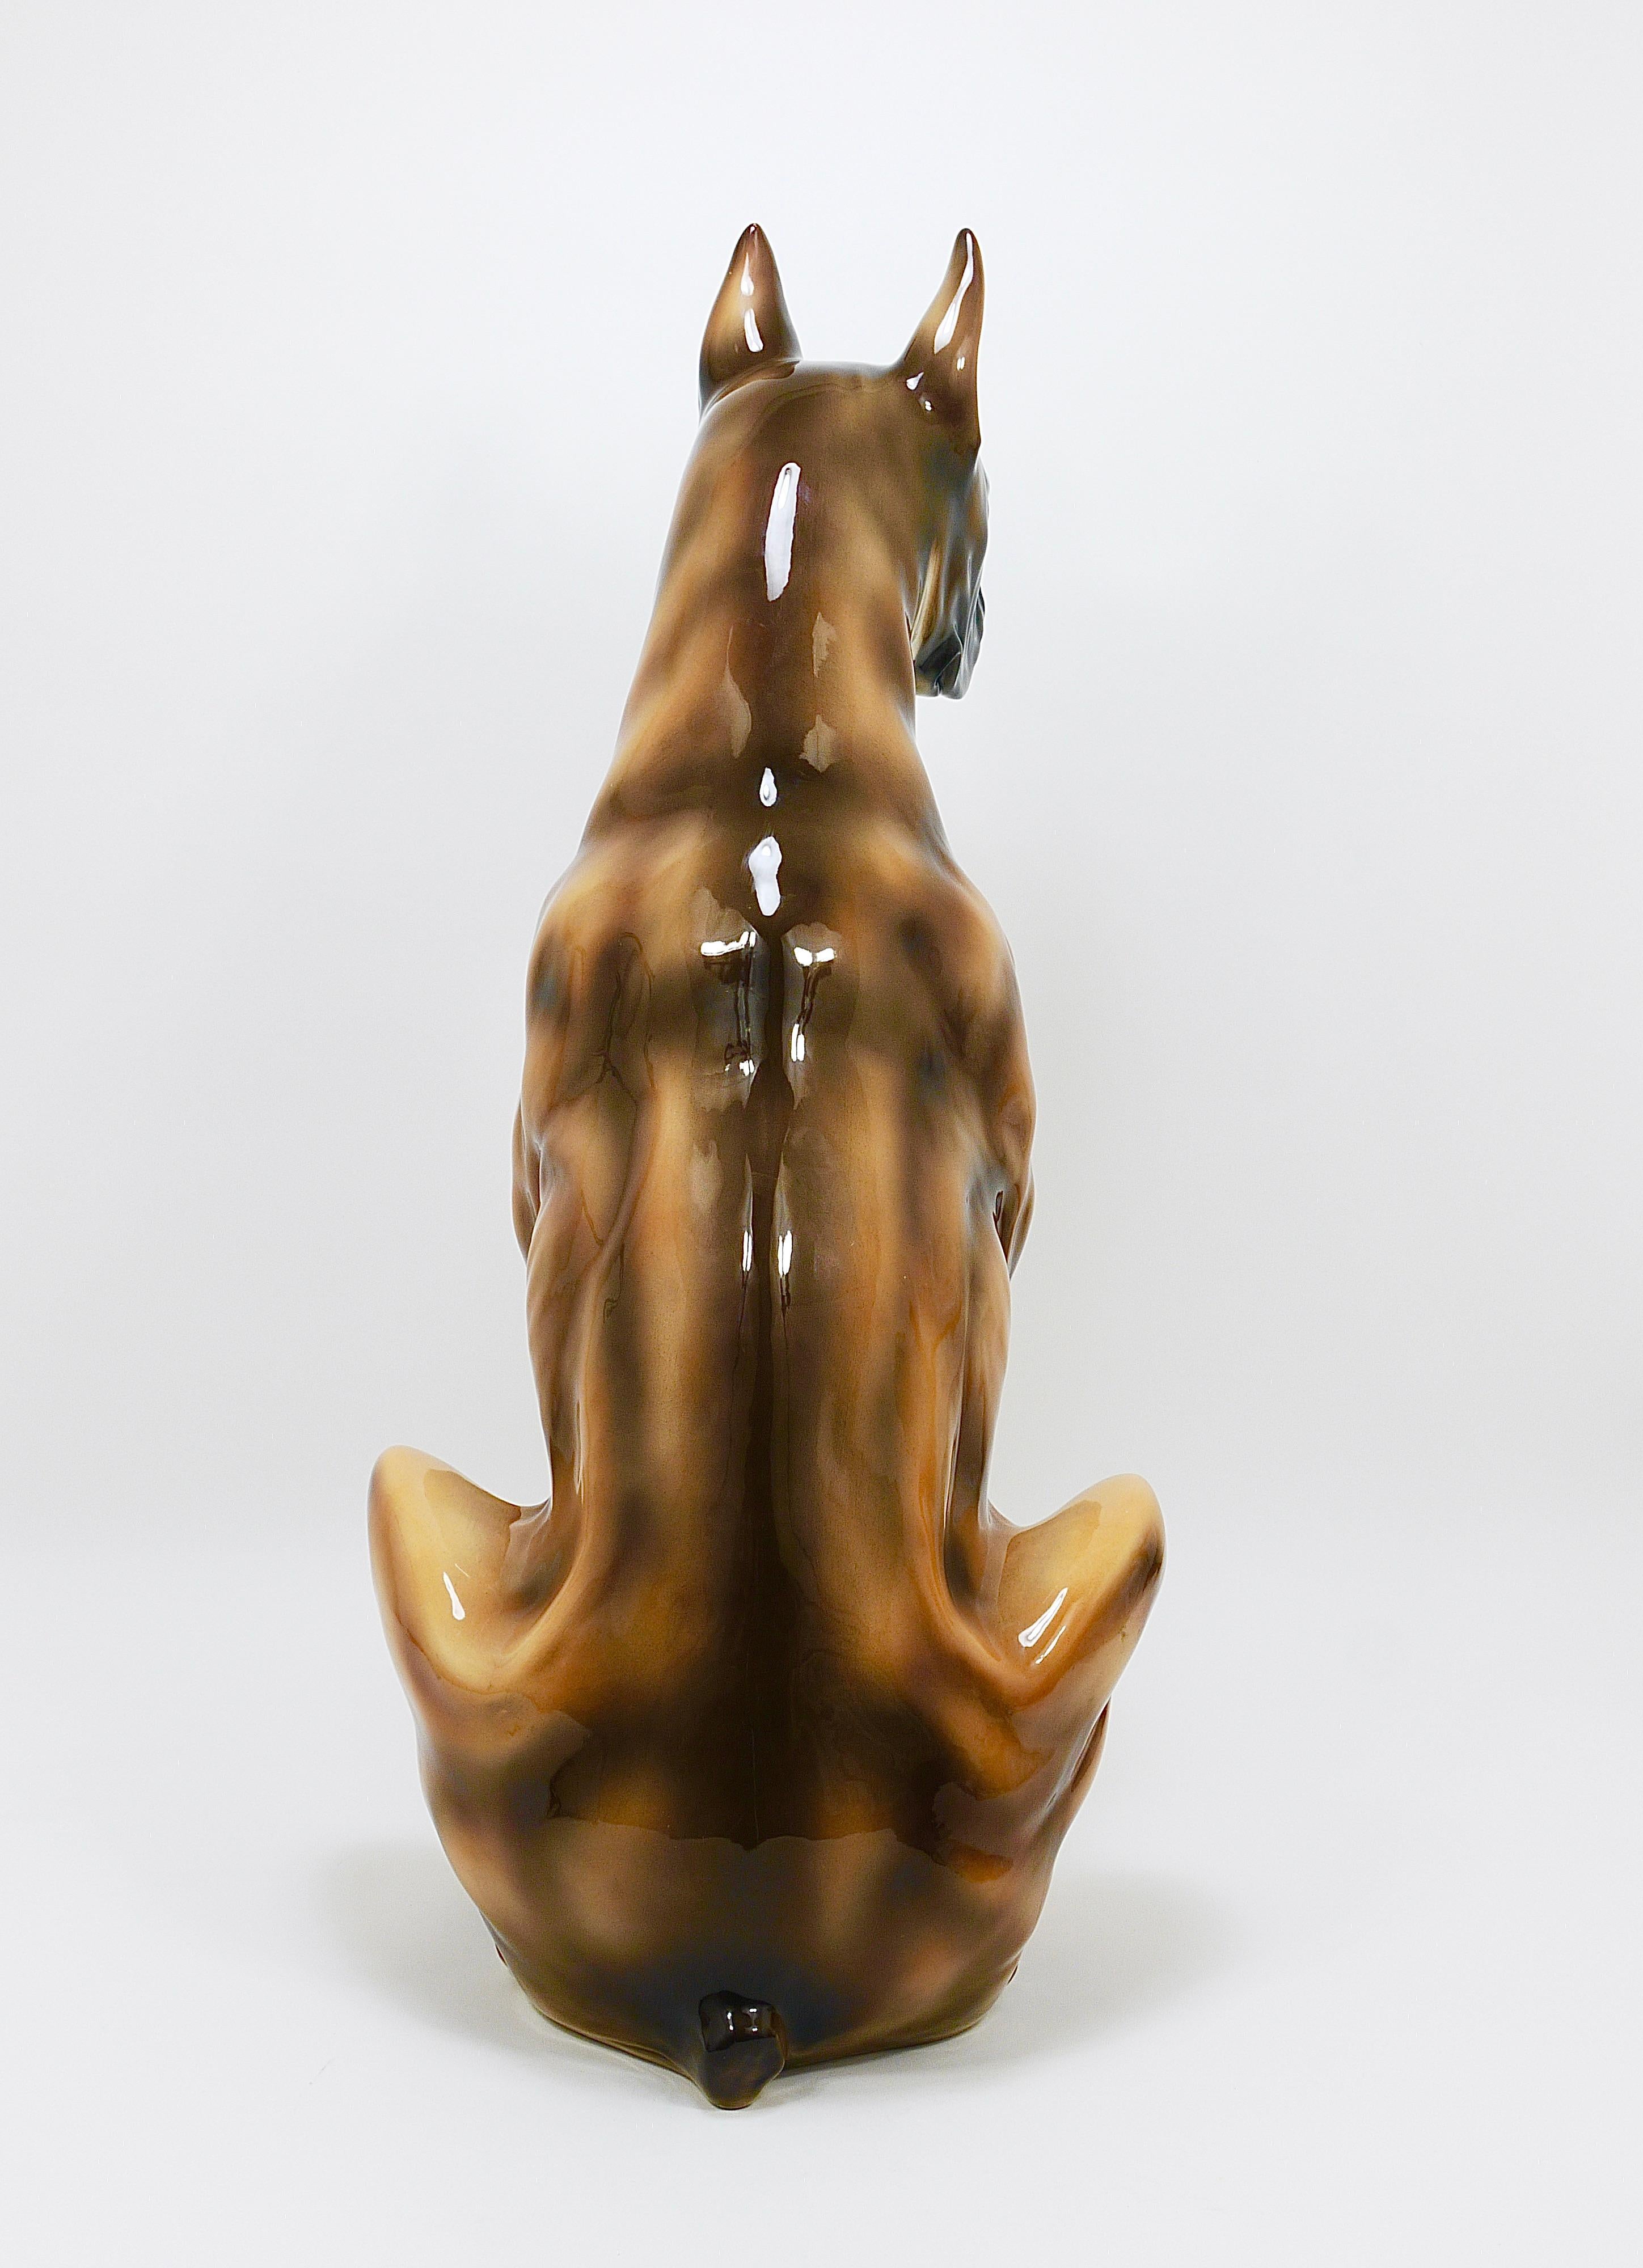 Boxer Dog Life-Size Majolica Statue Sculpture, Glazed Ceramic, Italy, 1970s For Sale 11